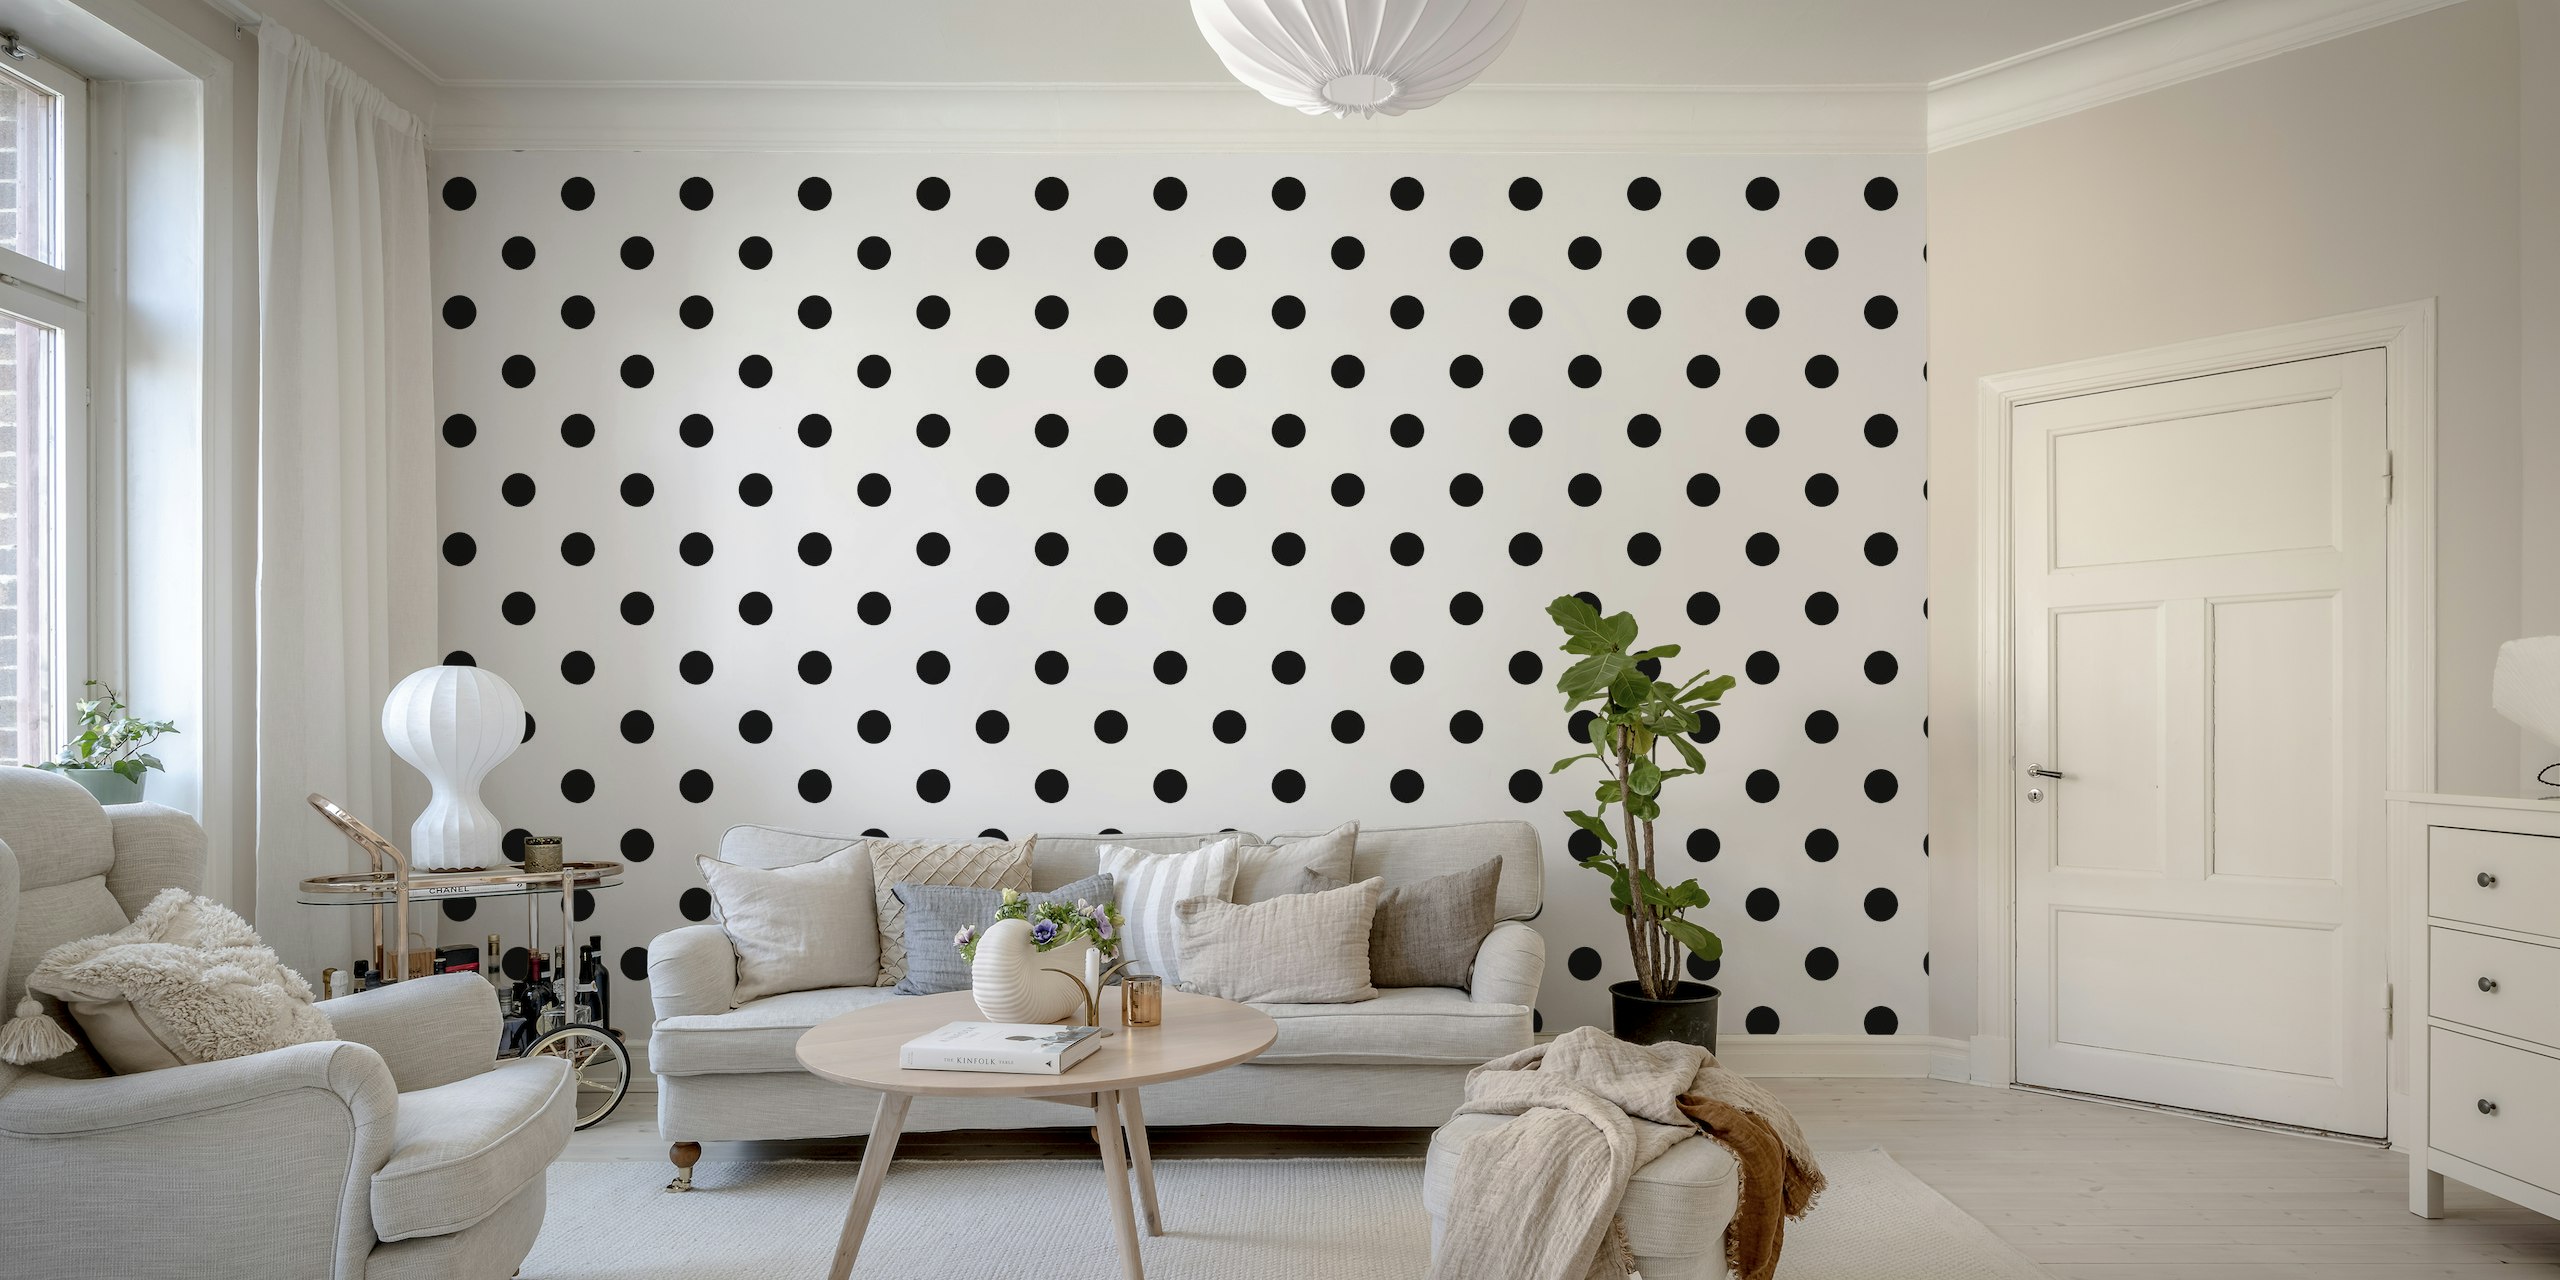 Black and white dots wallpaper 4 papel pintado